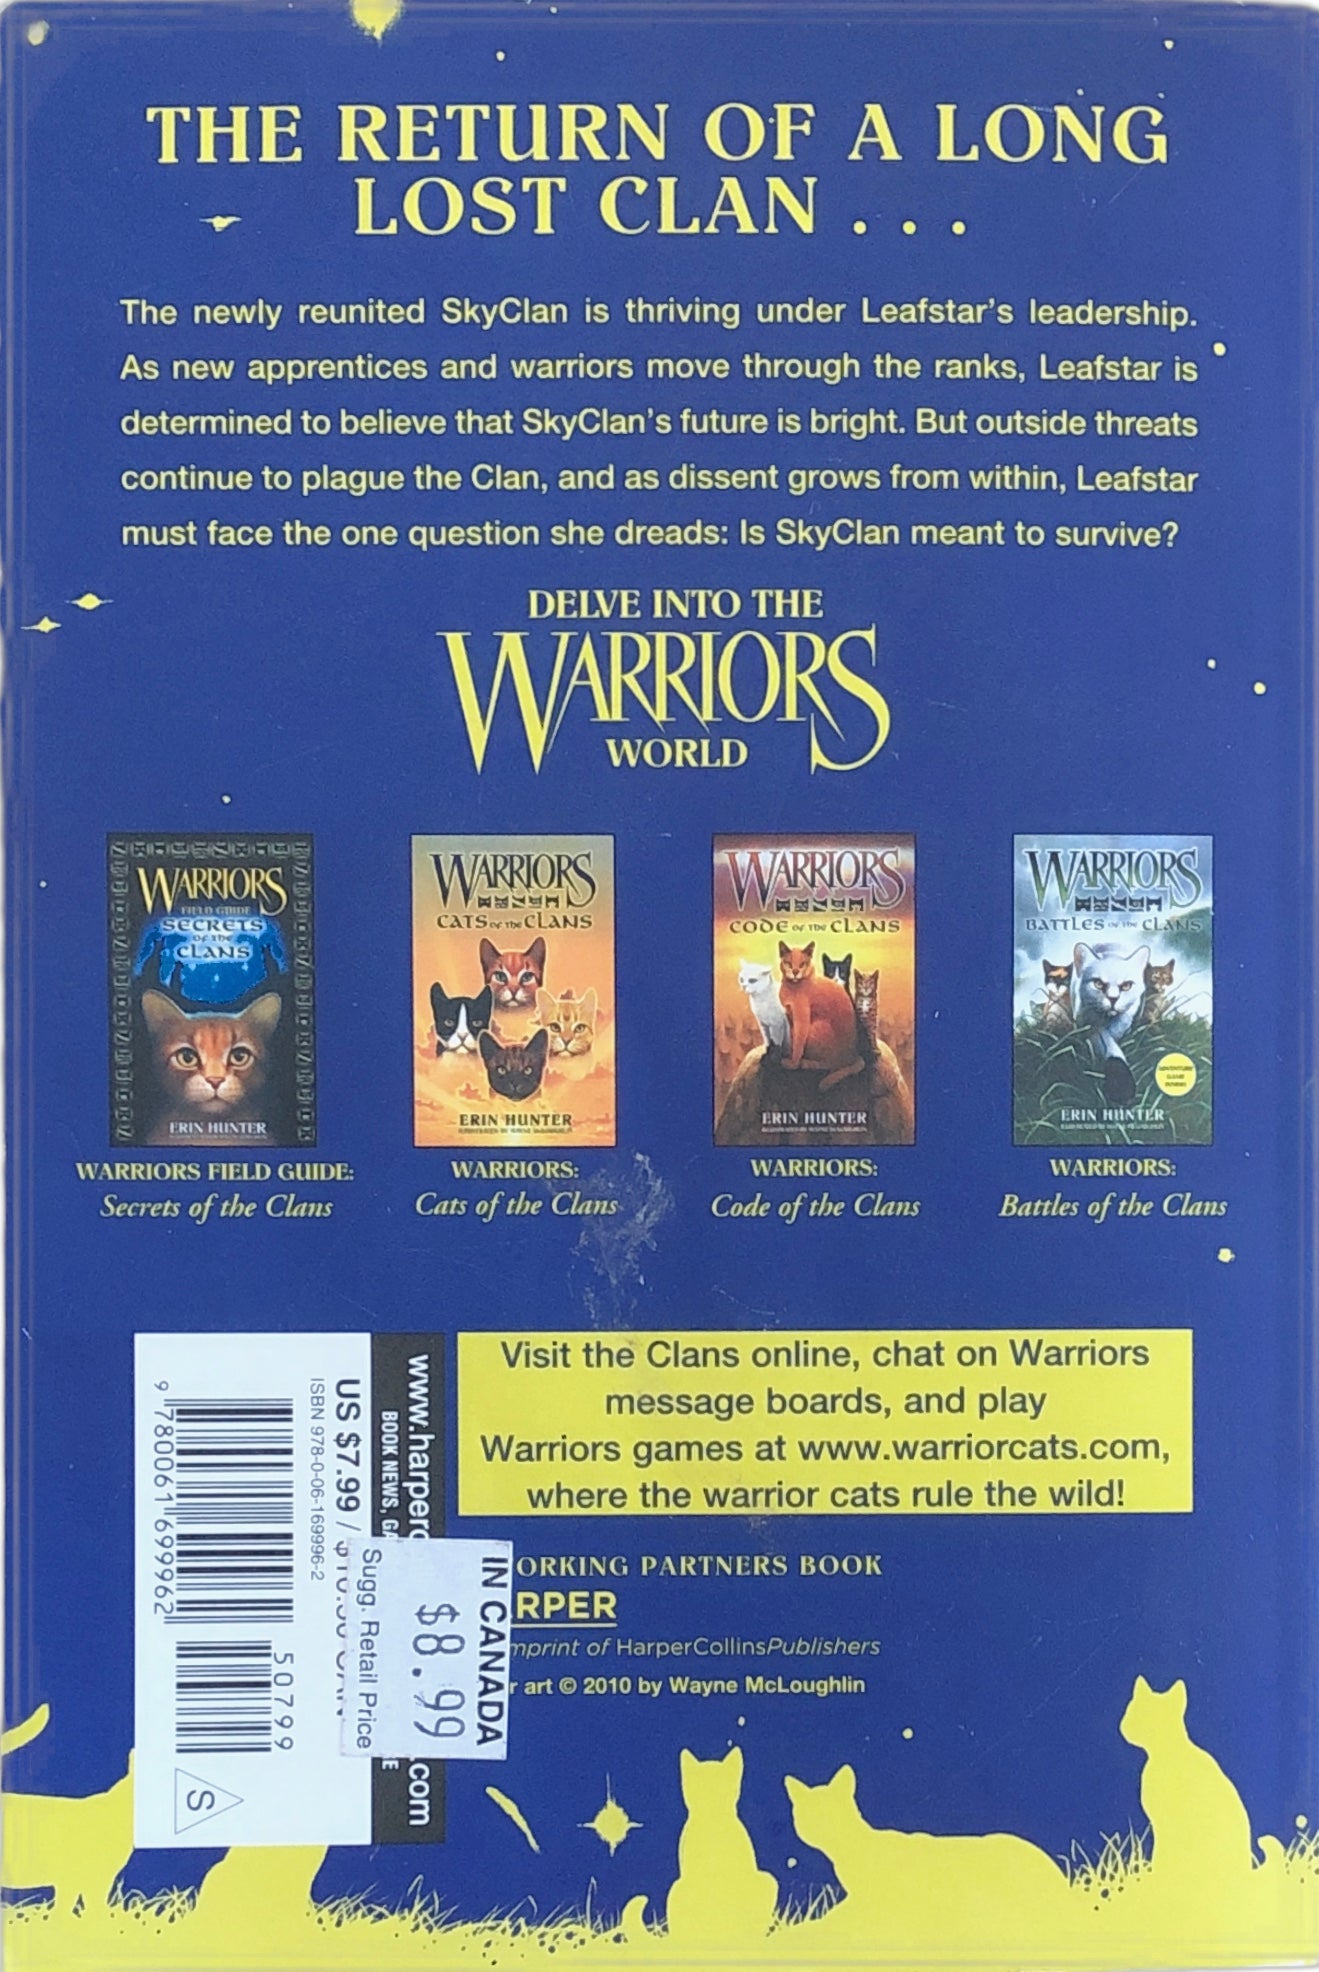 Warriors: Skyclan's Destiny (Super Edition) by Erin Hunter